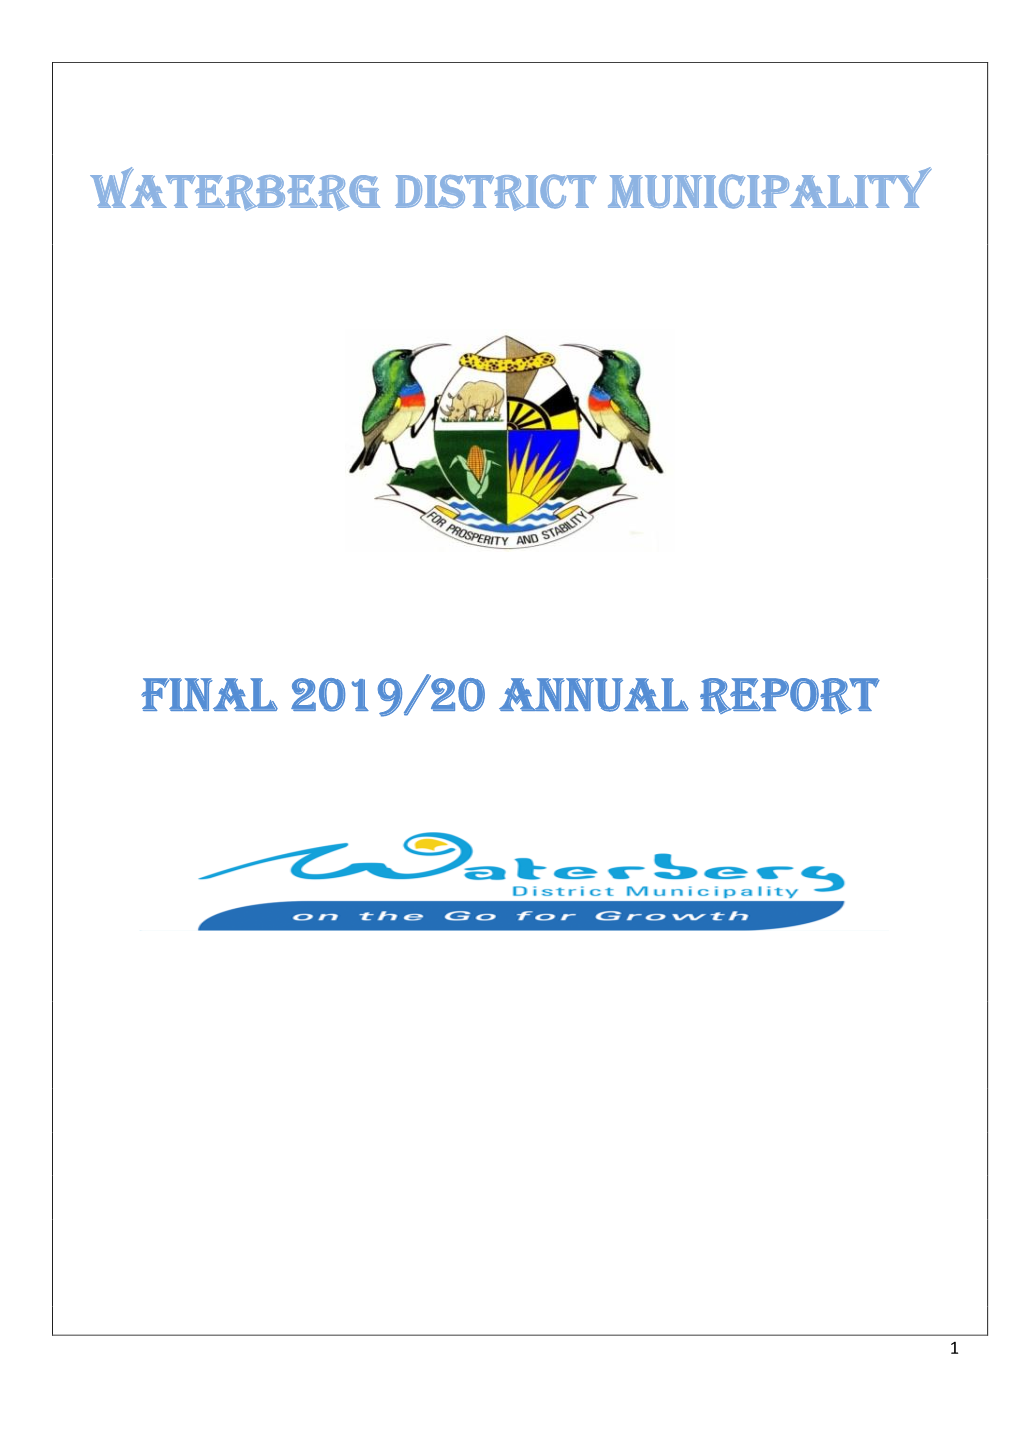 Final 2019/20 Annual Report